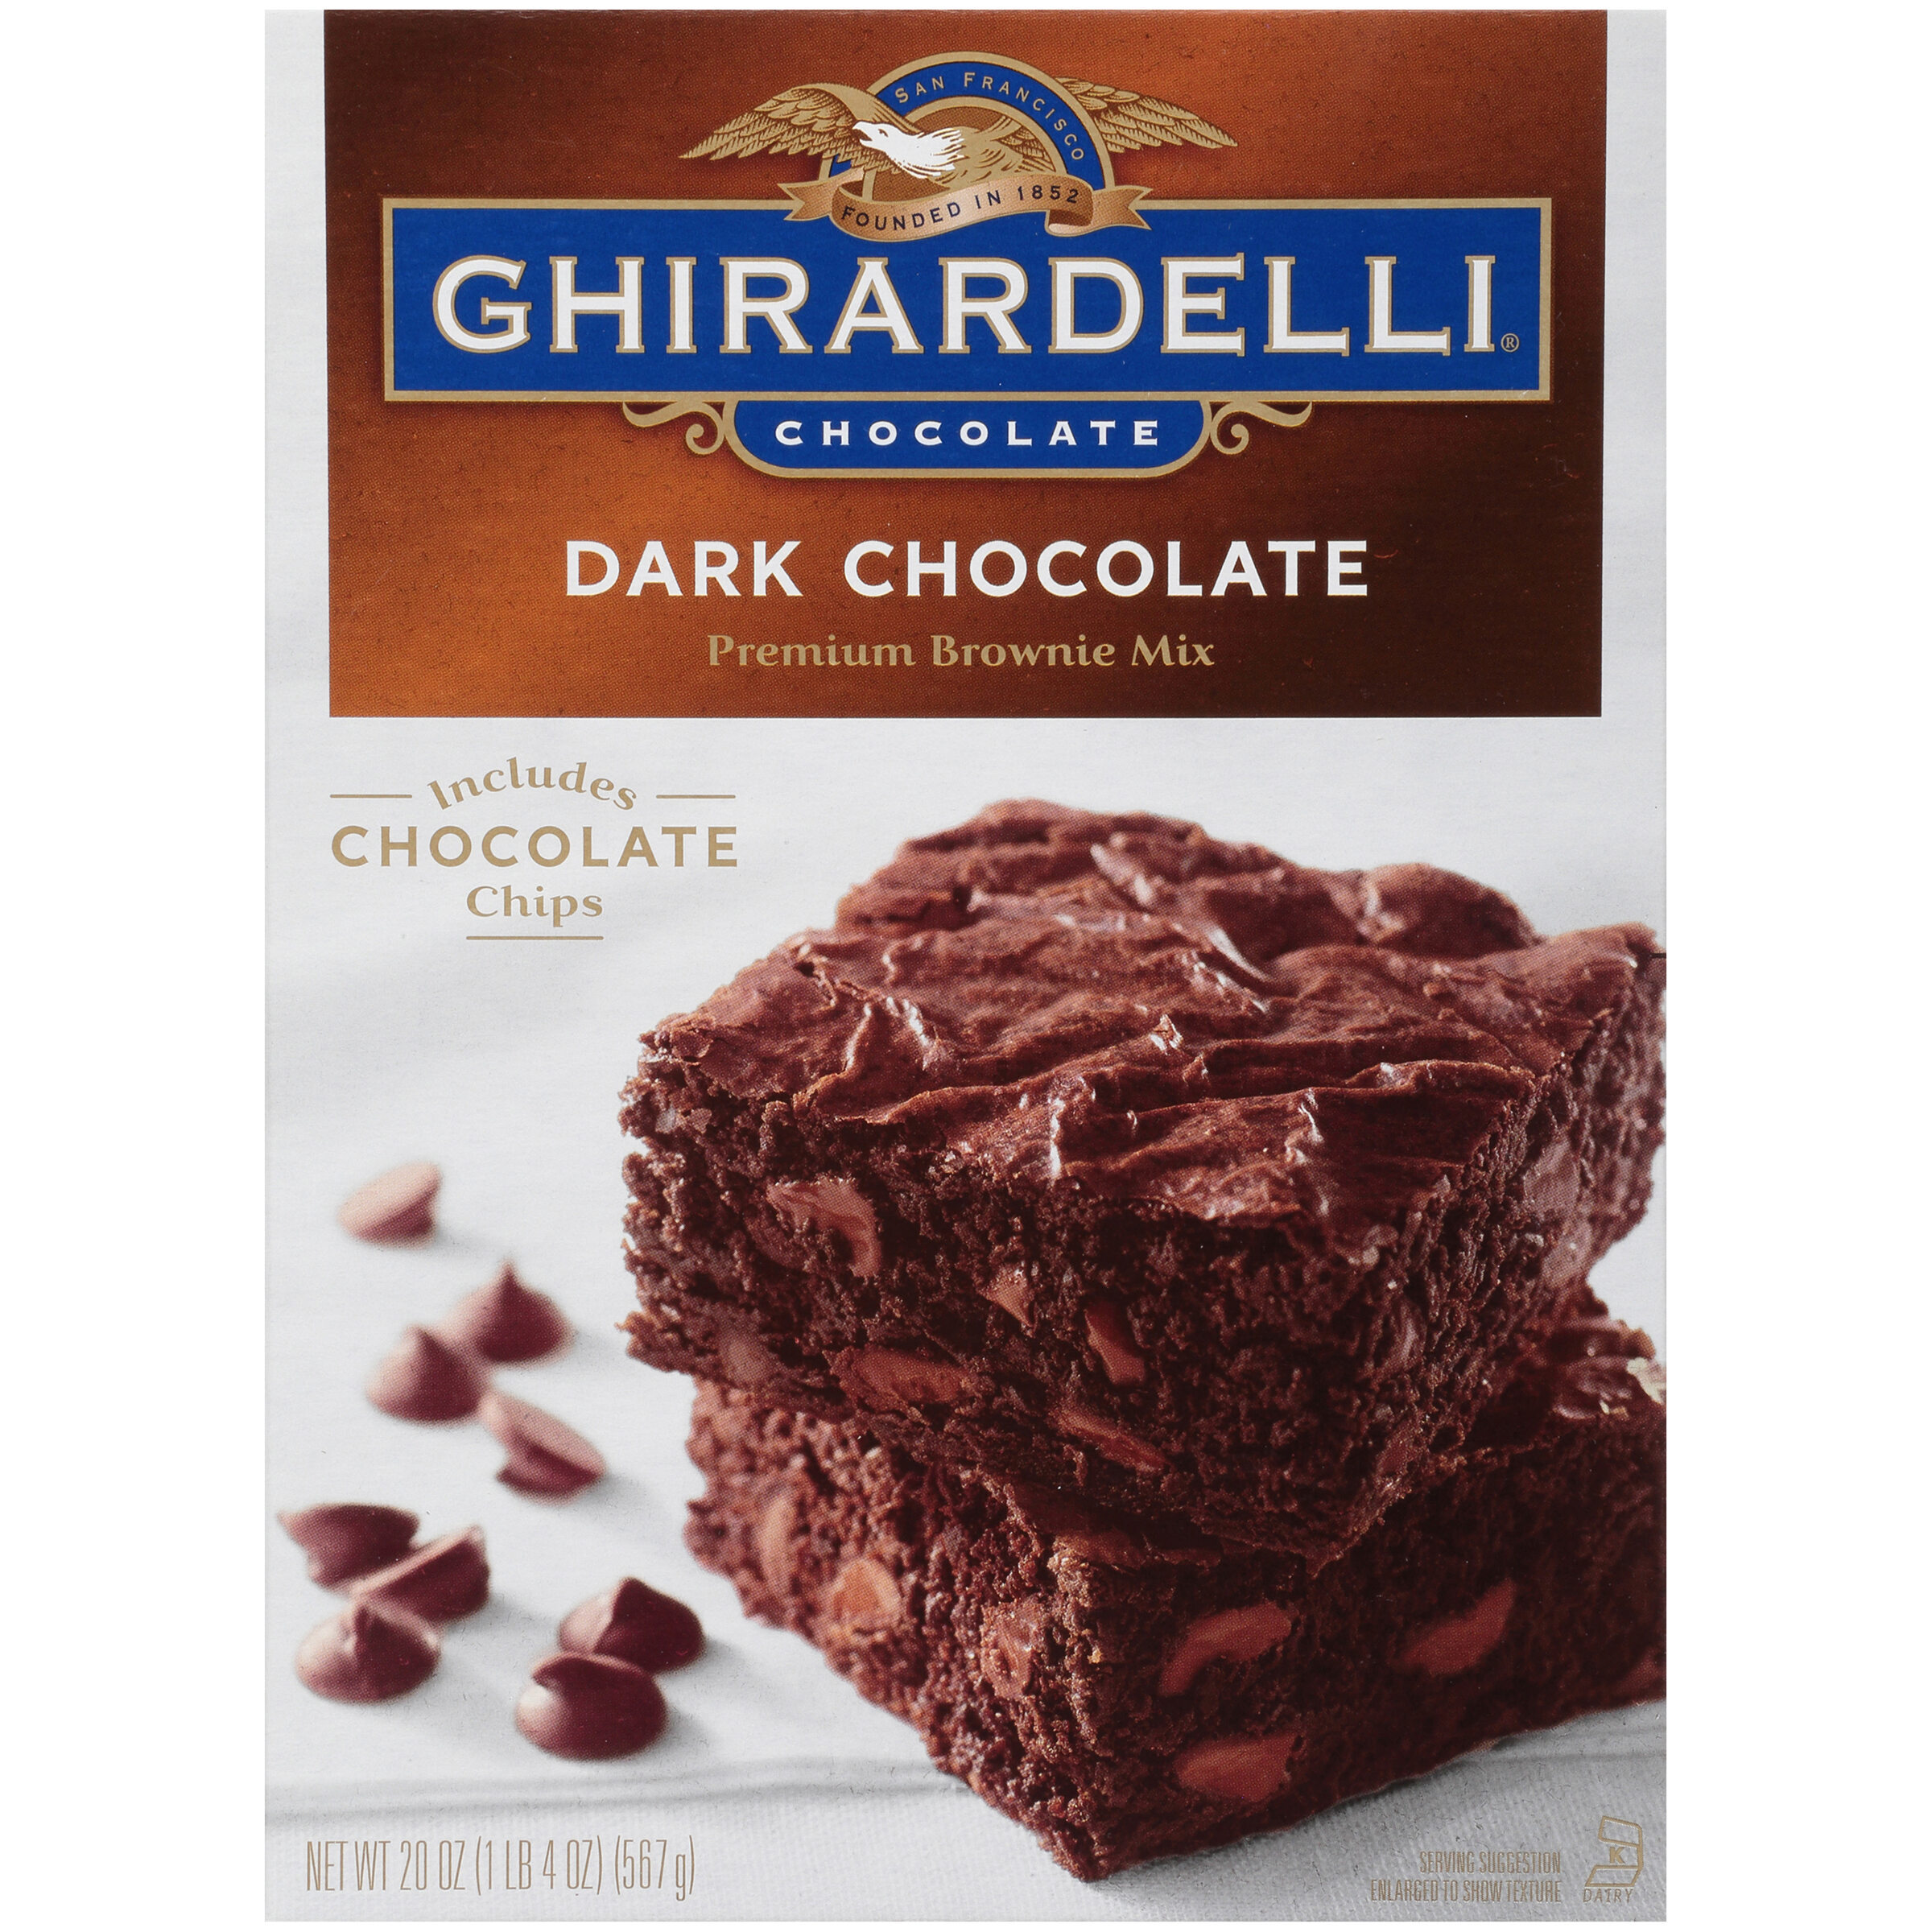 Ghirardelli Dark Chocolate Premium Brownie Mix, Includes Chocolate Chips, 20 oz Box - image 3 of 11